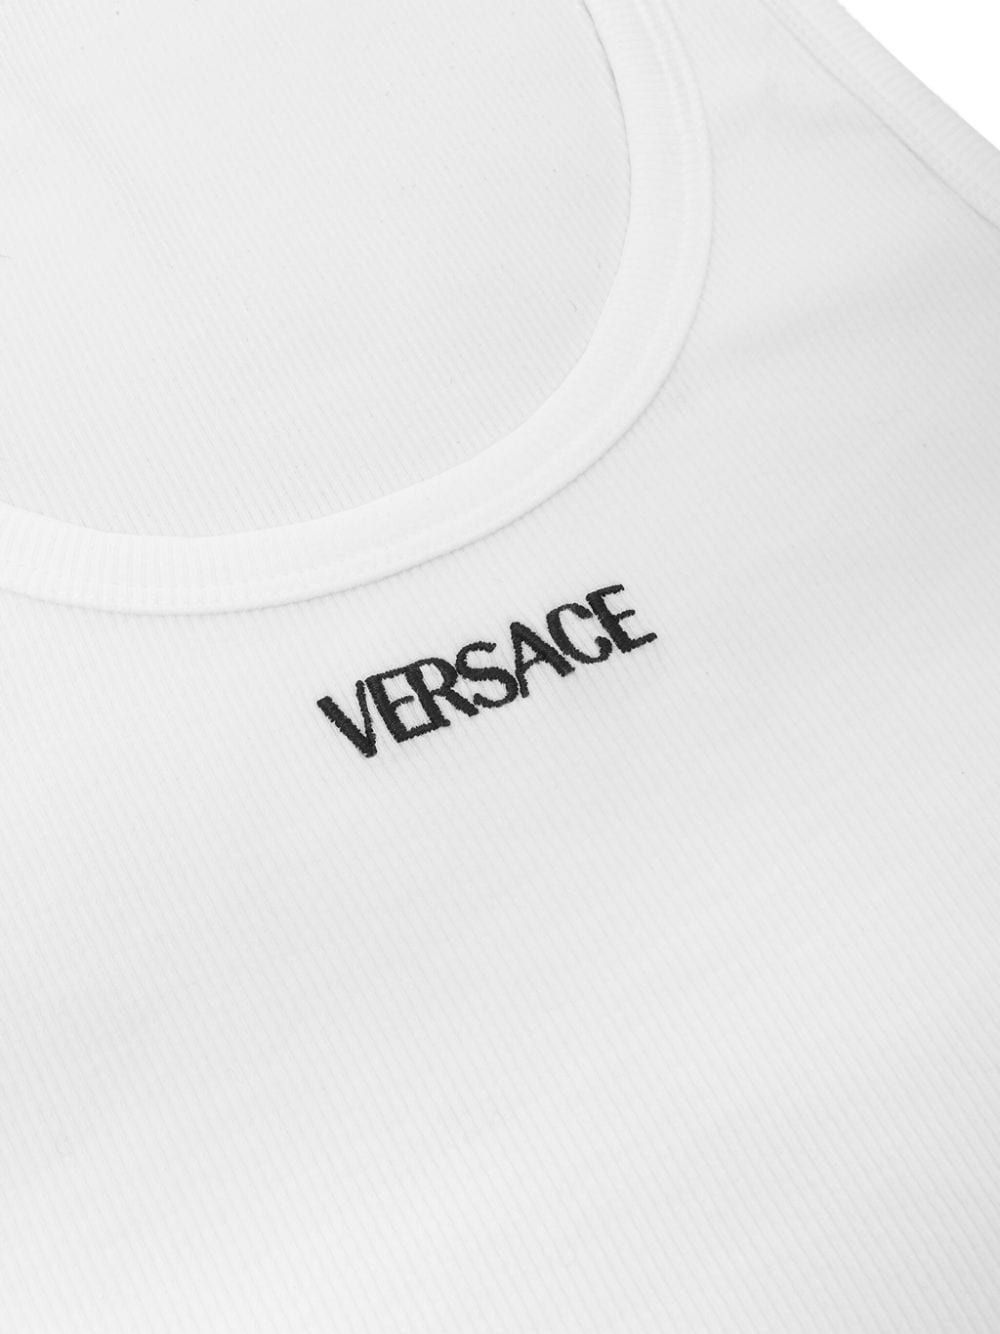 Versace Top White